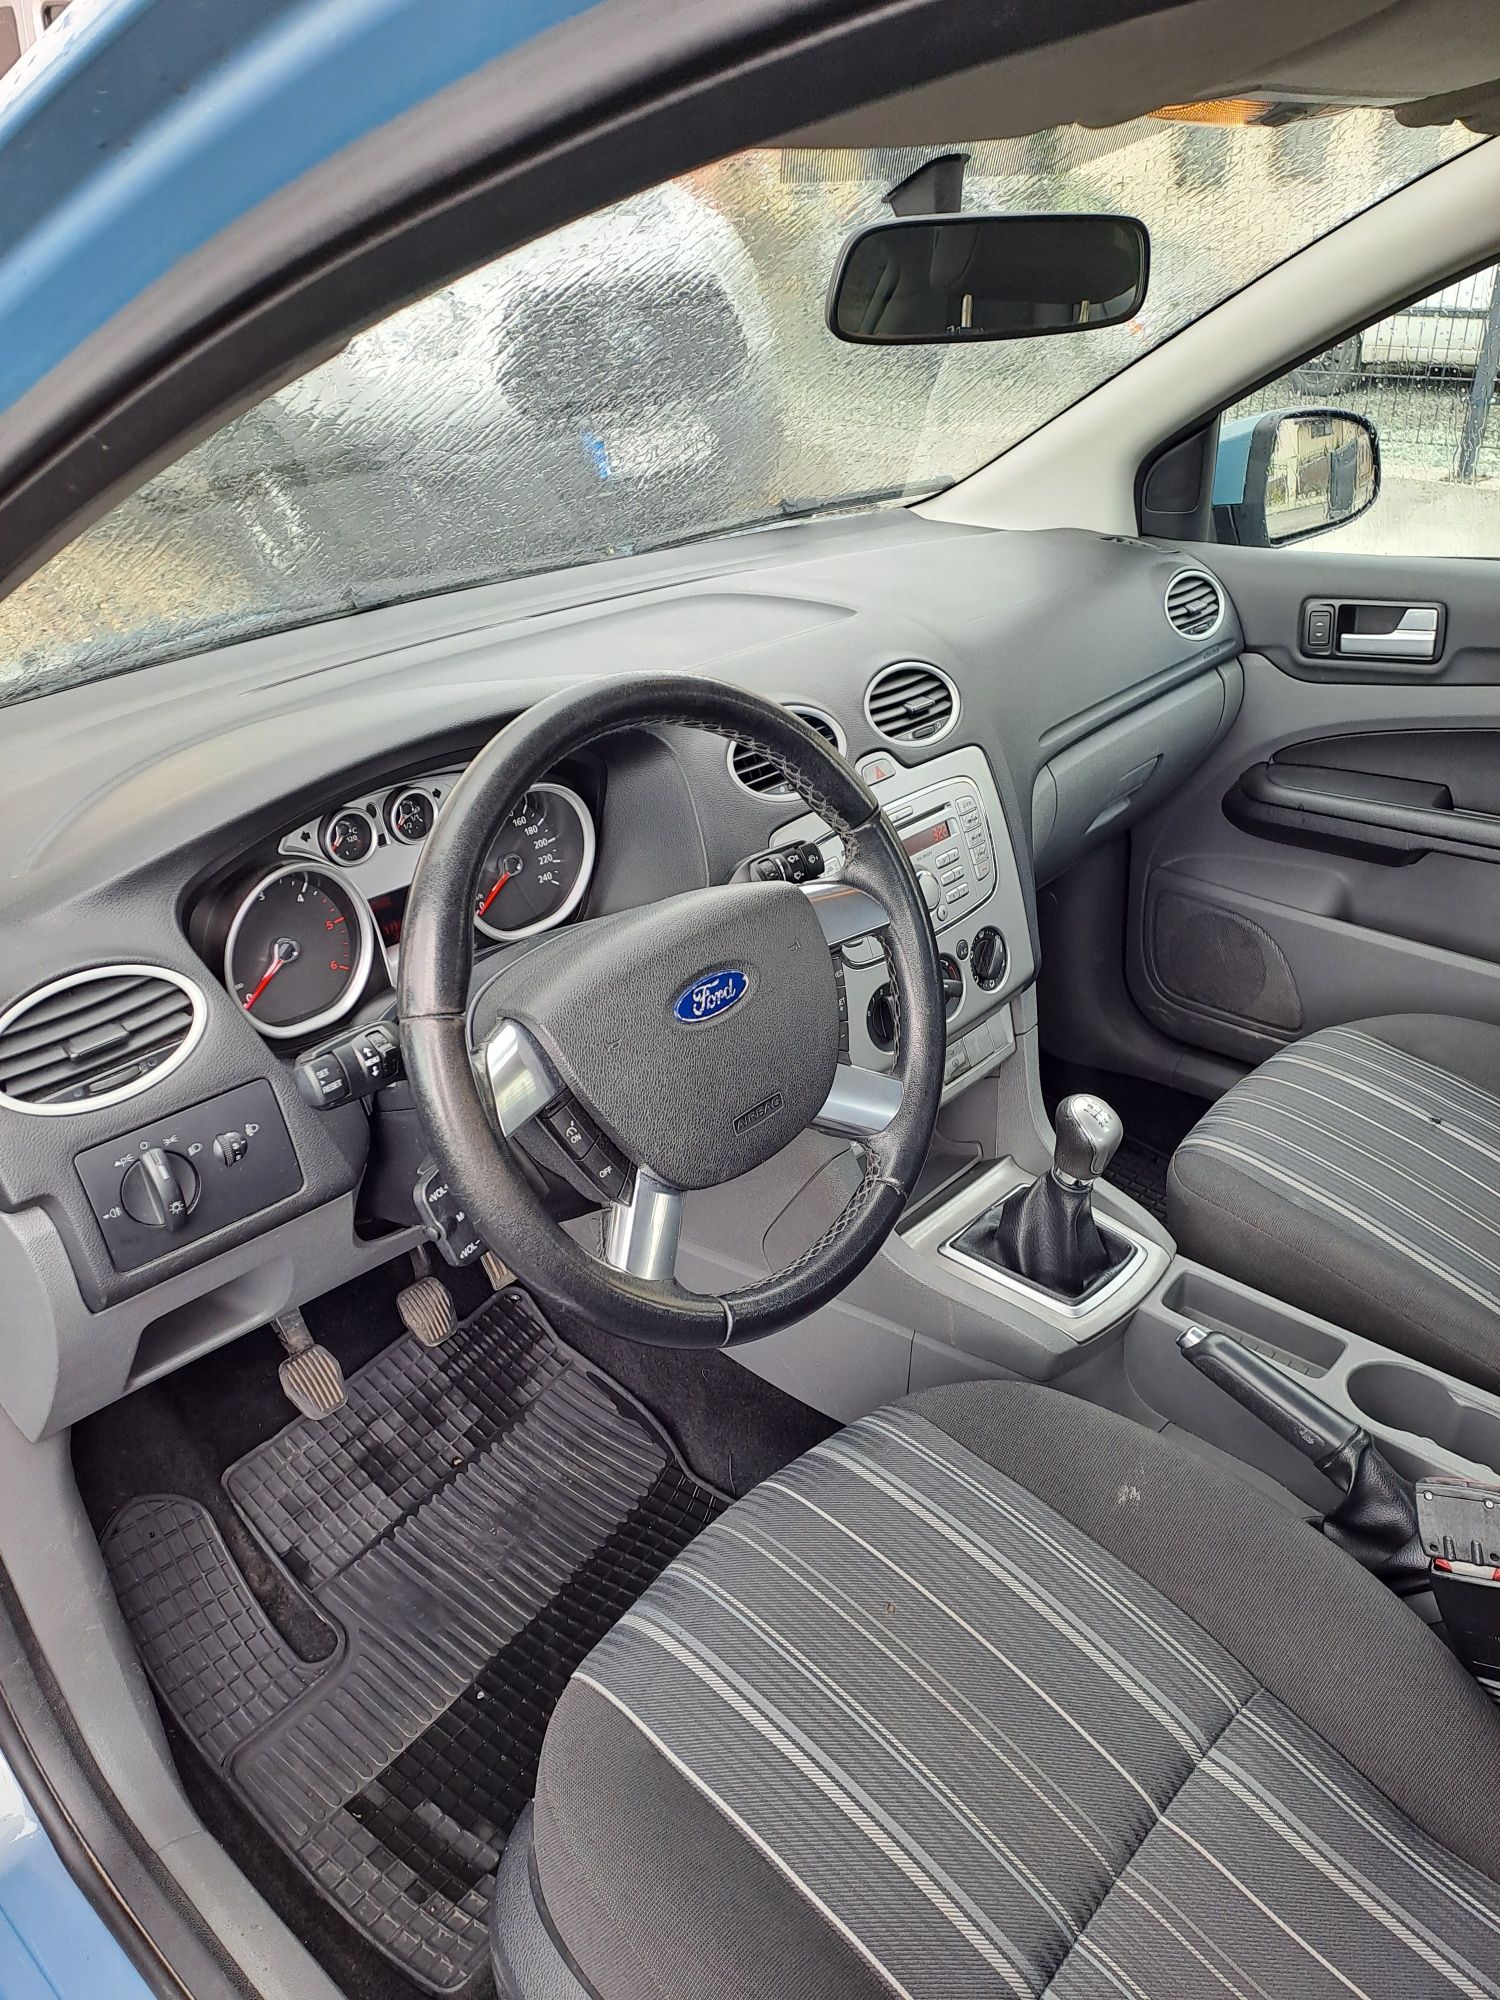 Ford Focus 1.6 tdci